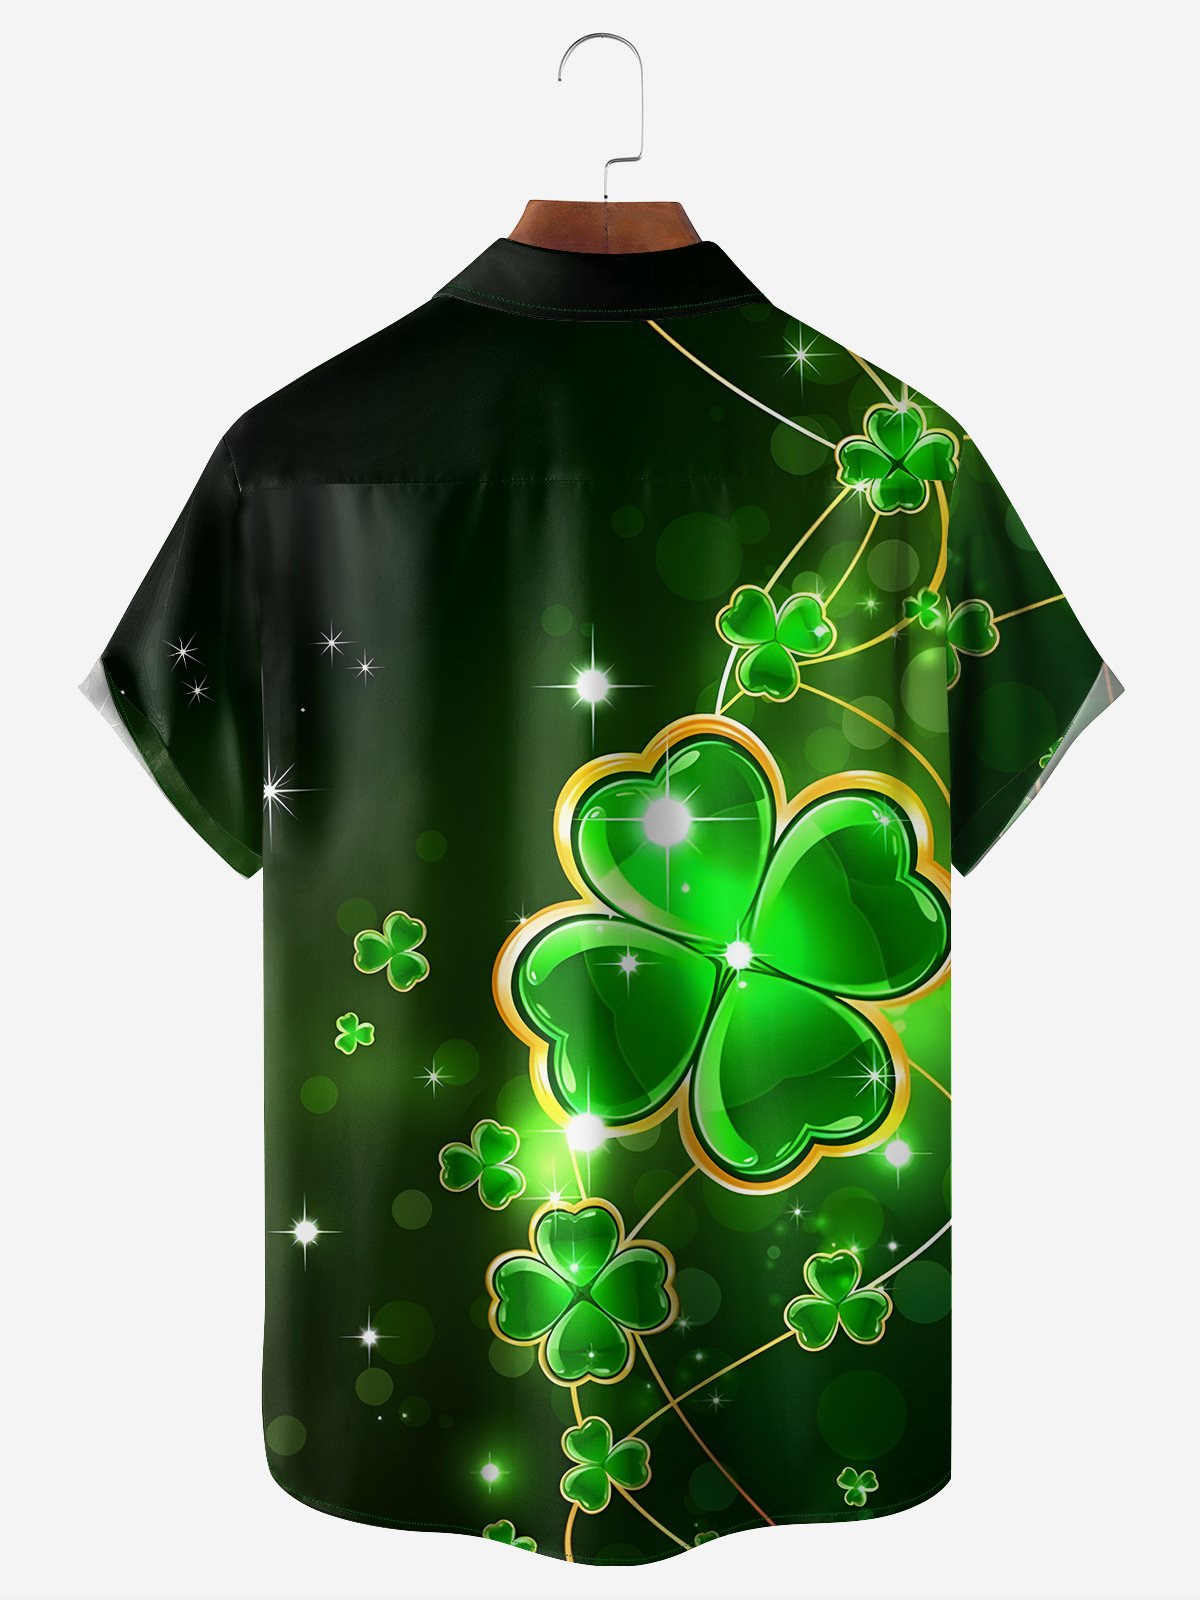 Hardaddy Irish Parade Hawaiian Button Up Shirt for Men Green St. Patrick's Day Lucky Clover Regular Fit Short Sleeve Shirt St Paddy's Day Shirt